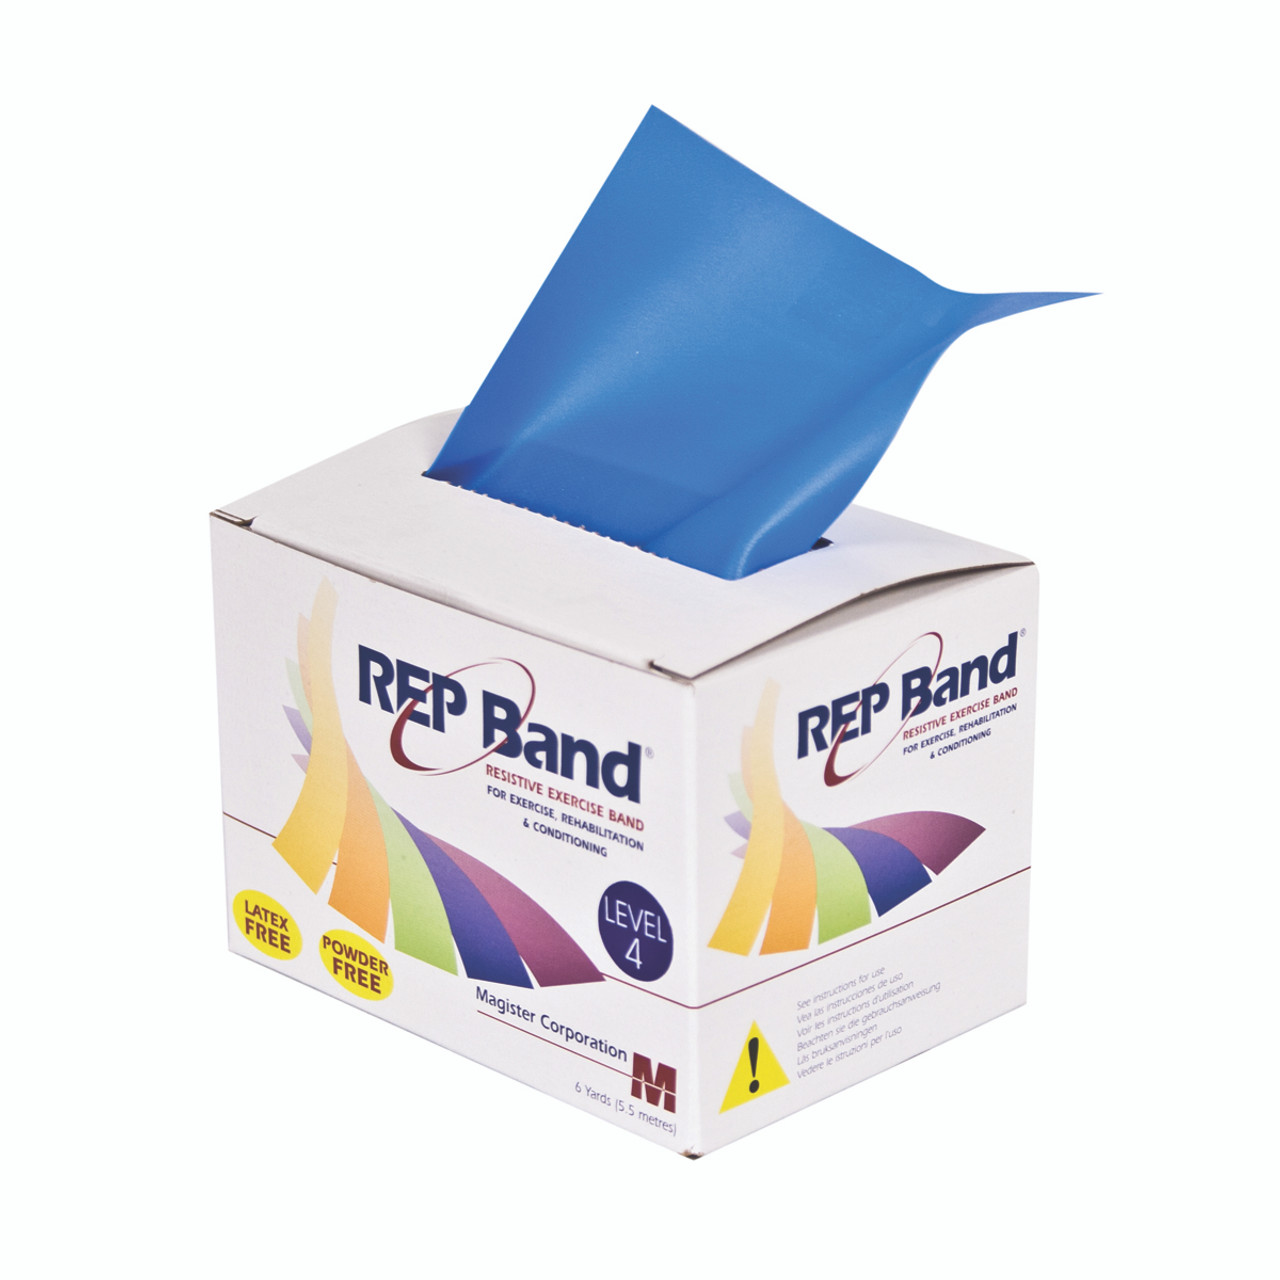 REP Band¨ exercise band - latex free - 6 yard - blueberry, level 4